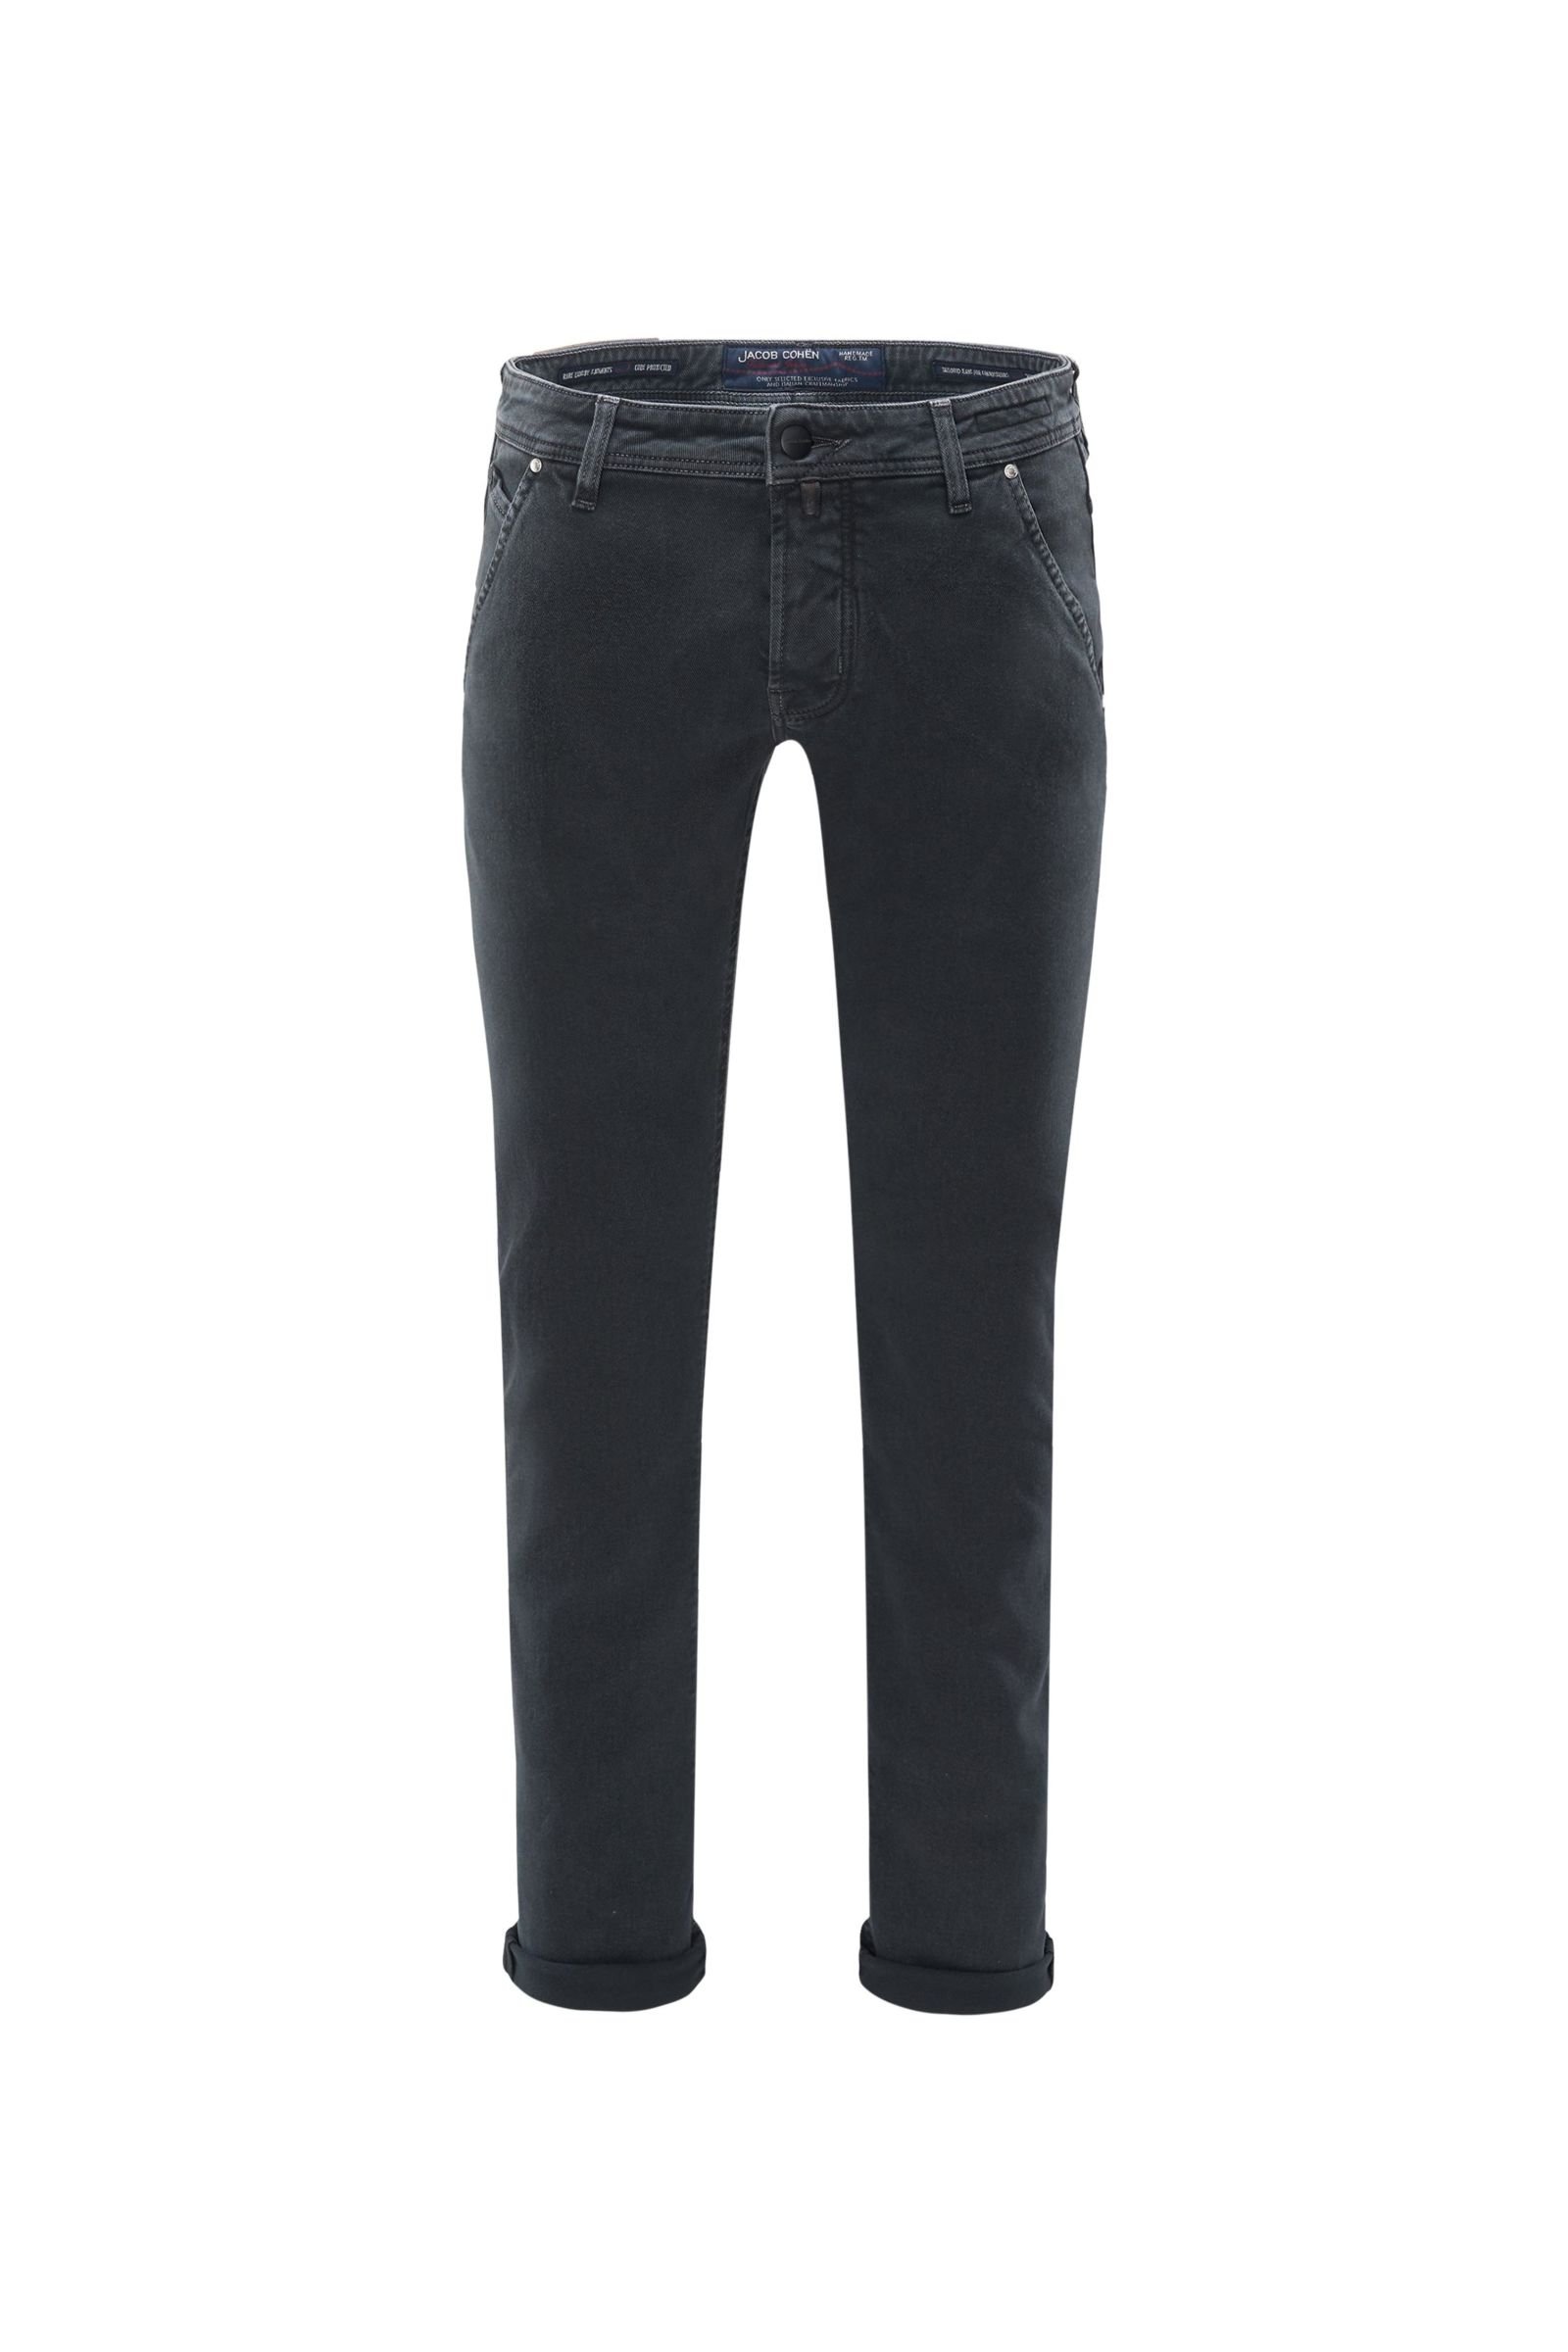 Cotton trousers 'J613 Comfort Vintage Slim Fit' dark grey